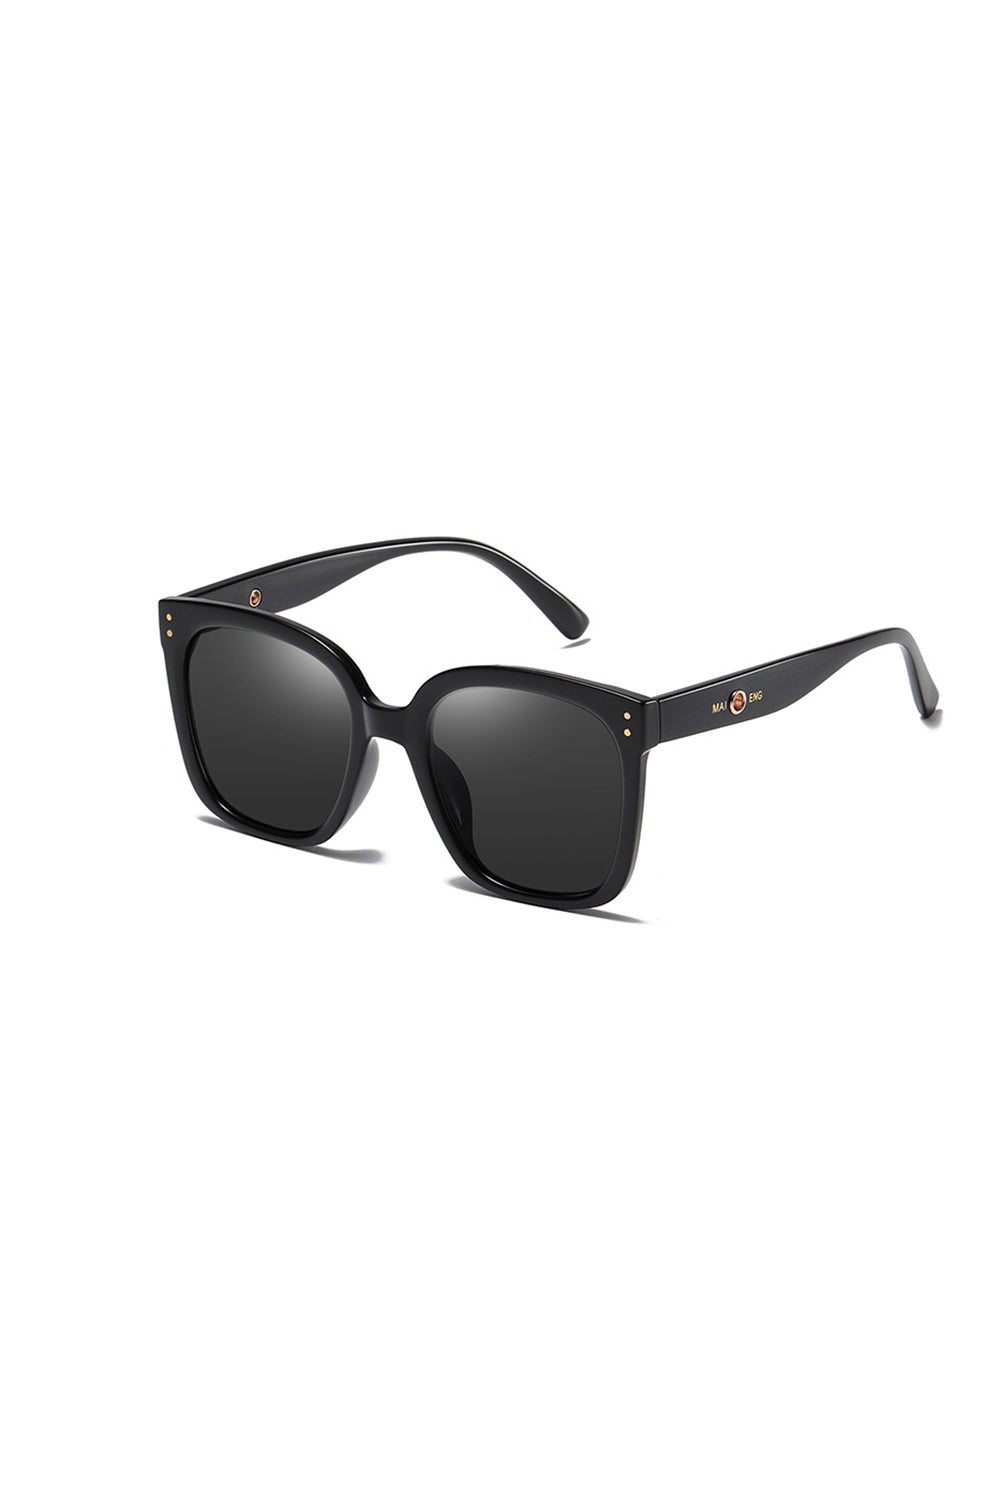 Black Trendy Retro Square Frame Sunglasses - SELFTRITSS